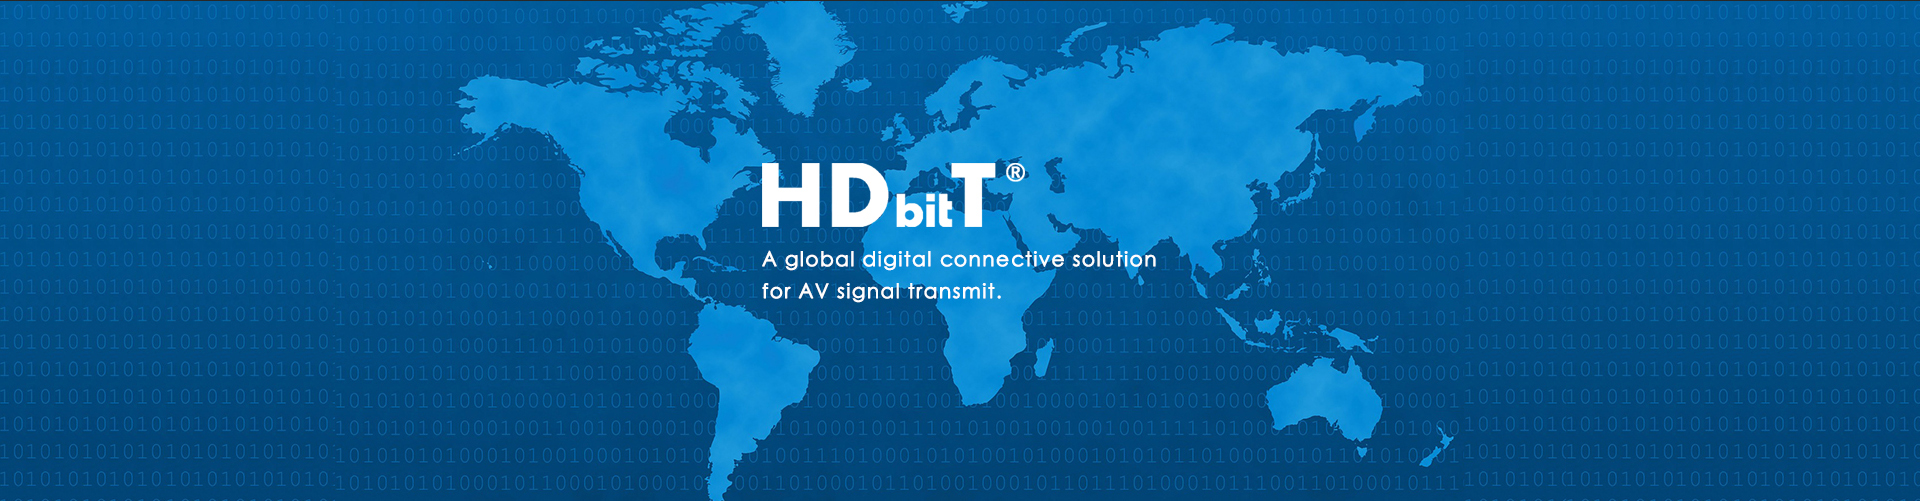 HDbitT is a global digital connective protocol